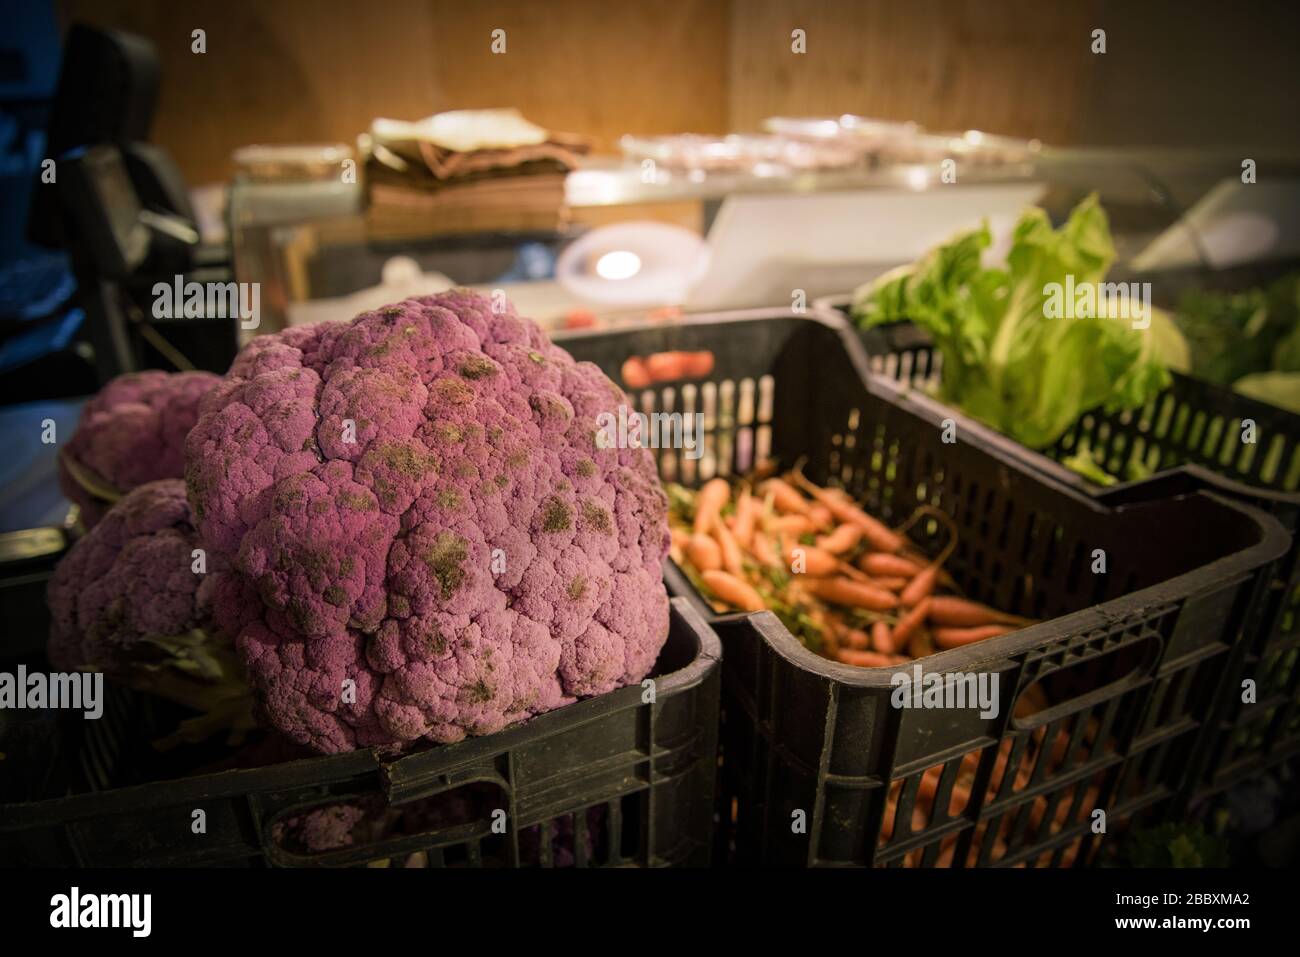 Small Organic produce Business Stock Photo